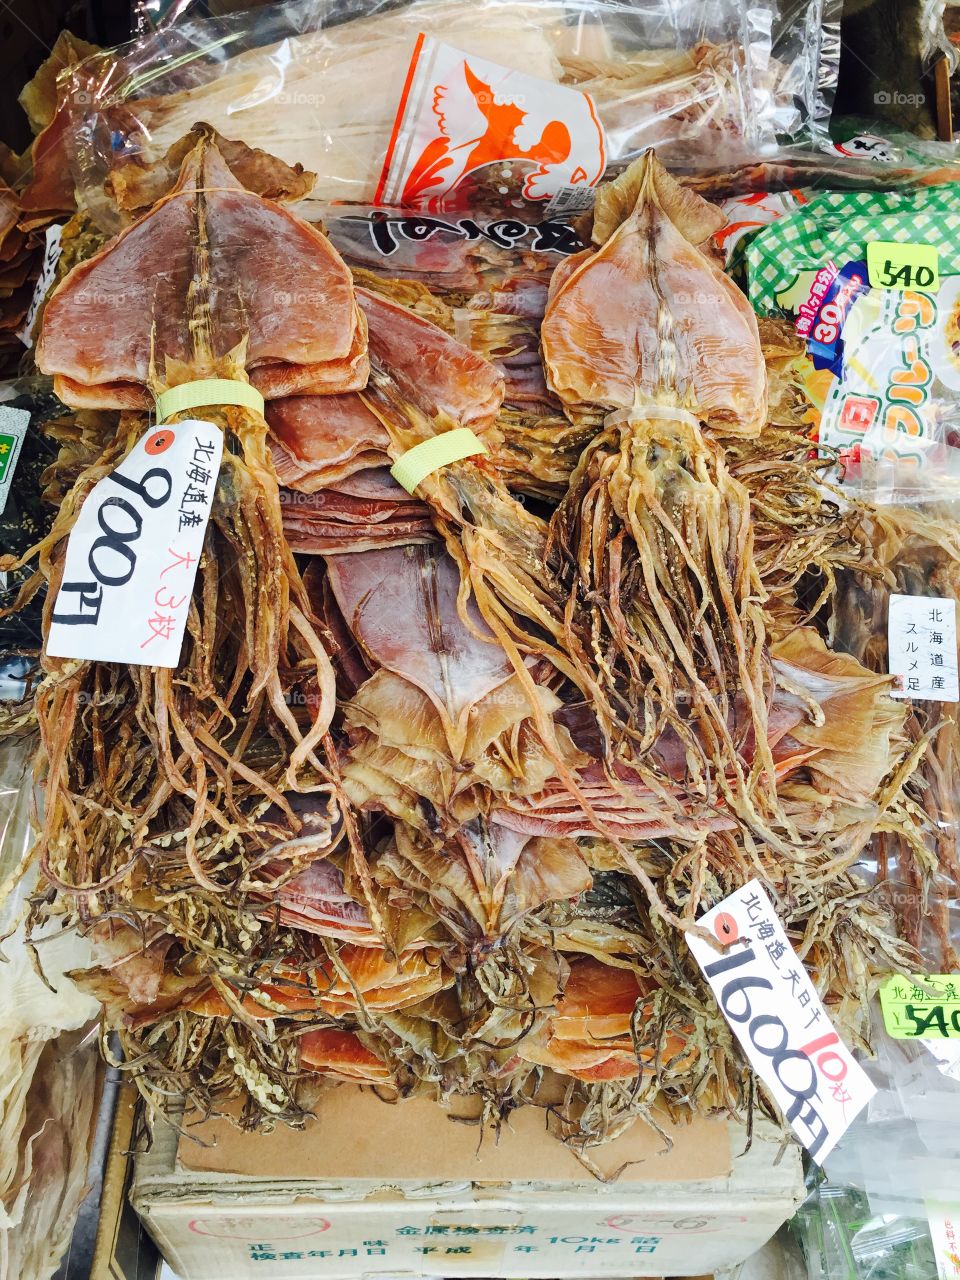 Tsukiji Fish Markets. Taken on a trip to Japan in May 2015